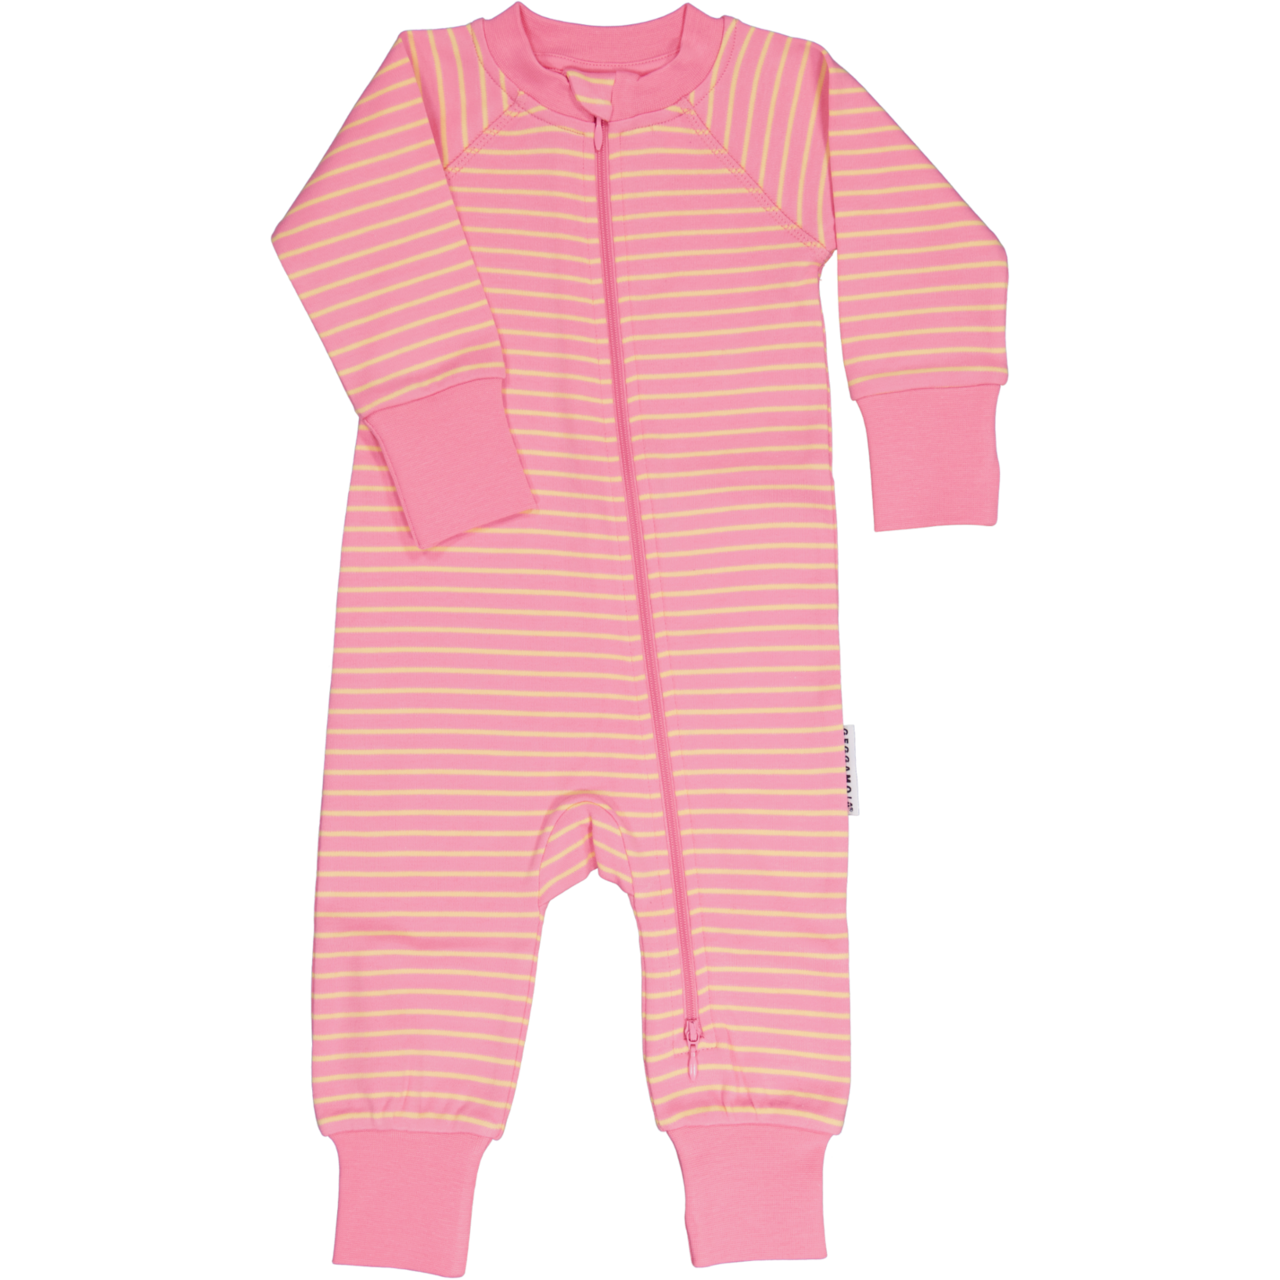 Pyjamas heldräktRosa/gul  74/80